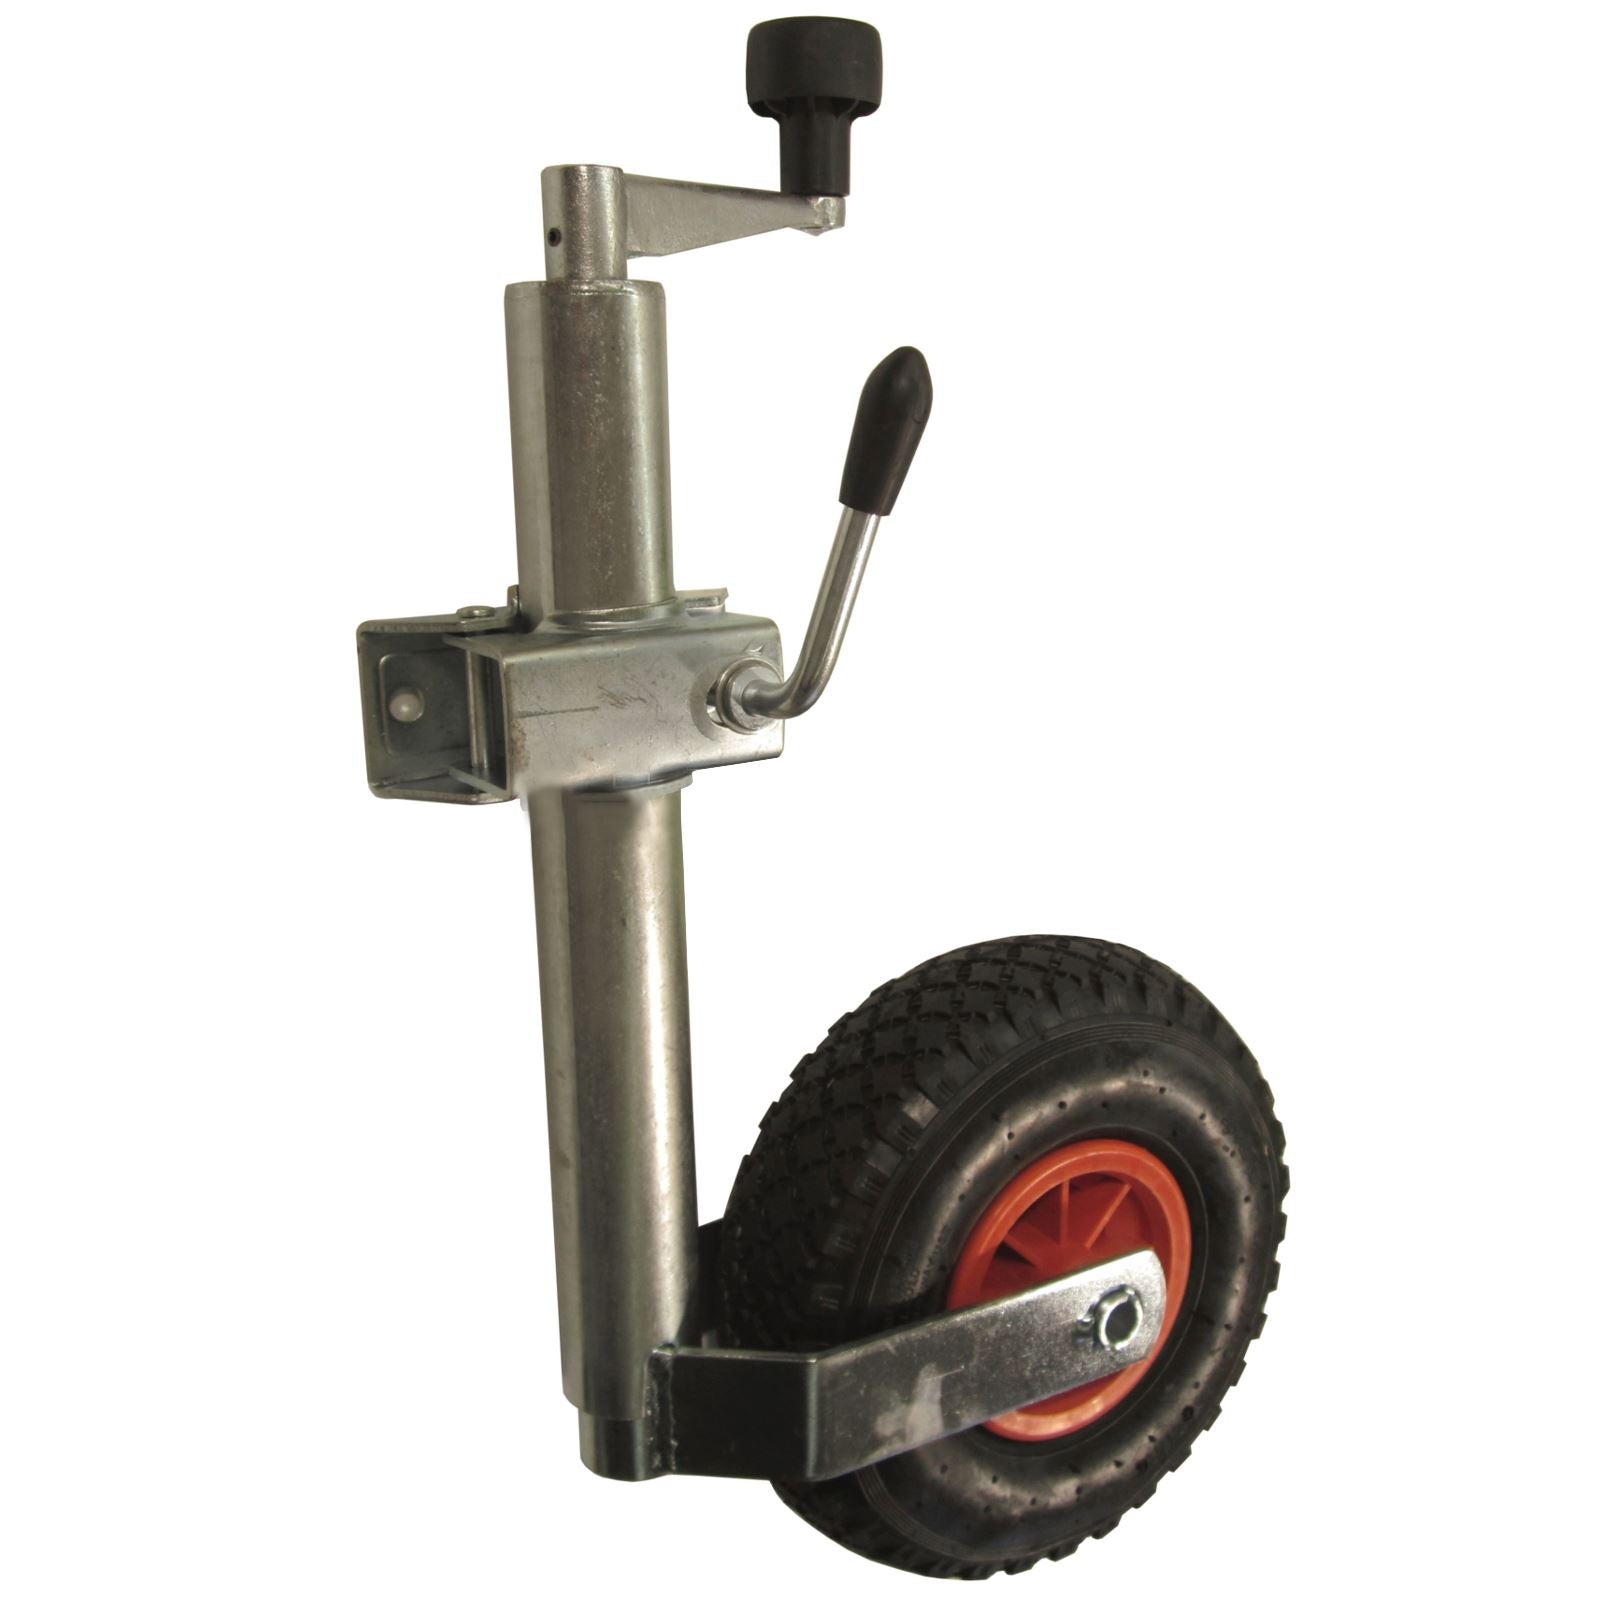 Heavy duty pneumatic jockey wheel and clamp (48MM)TR005